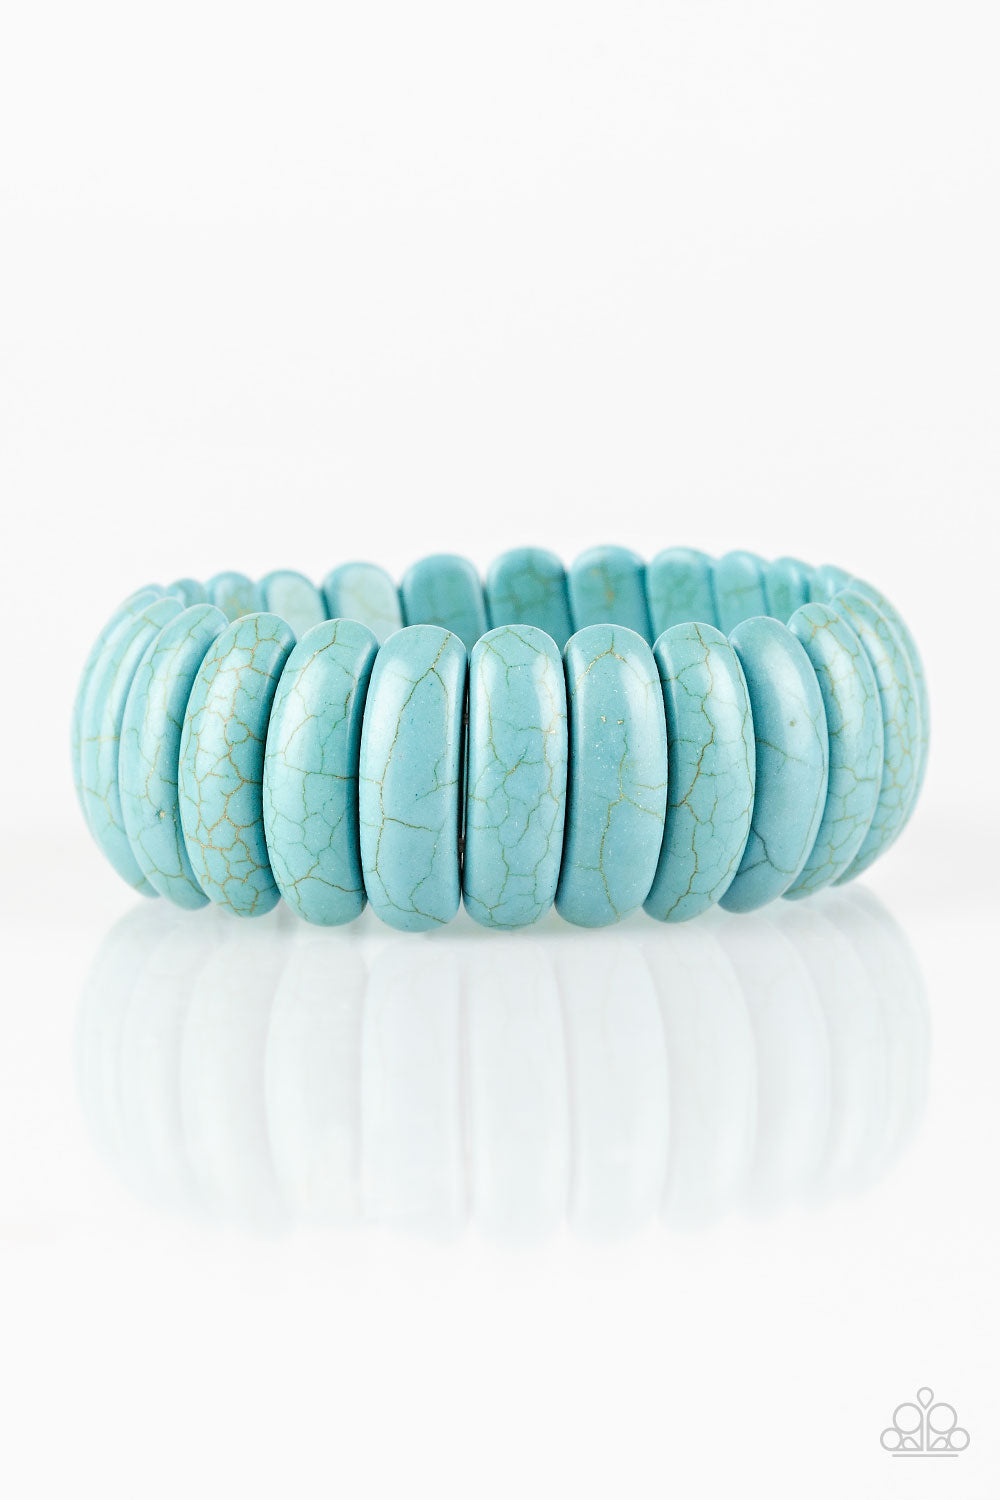 Paparazzi Peacefully Primal Blue Bracelet. Get Free Shipping. Stretchy $5 Bracelets. 